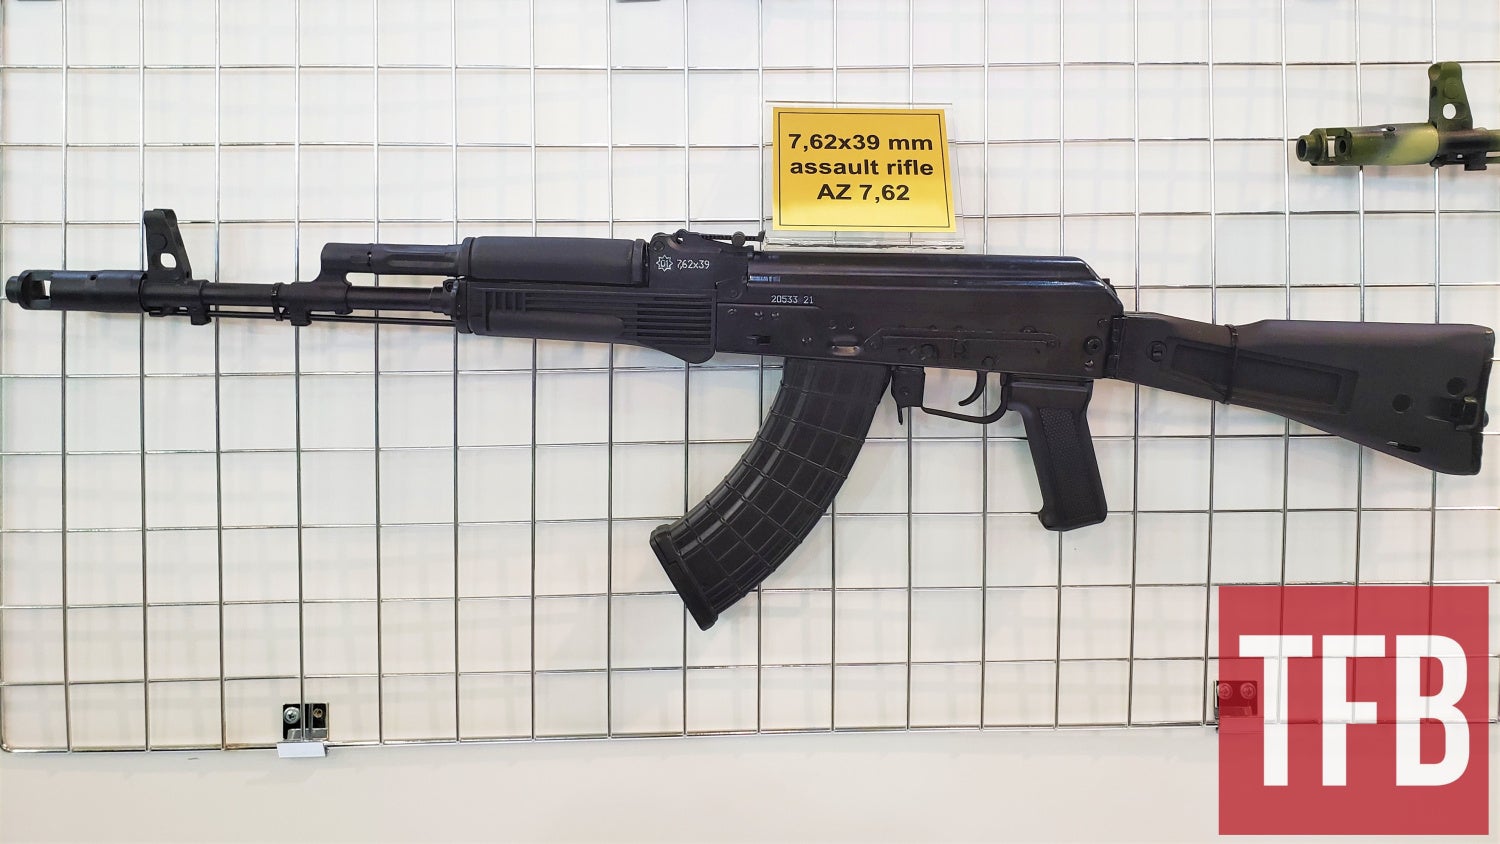 Azerbaijani AK rifle chambered in 7.62x39 called AZ 7.62